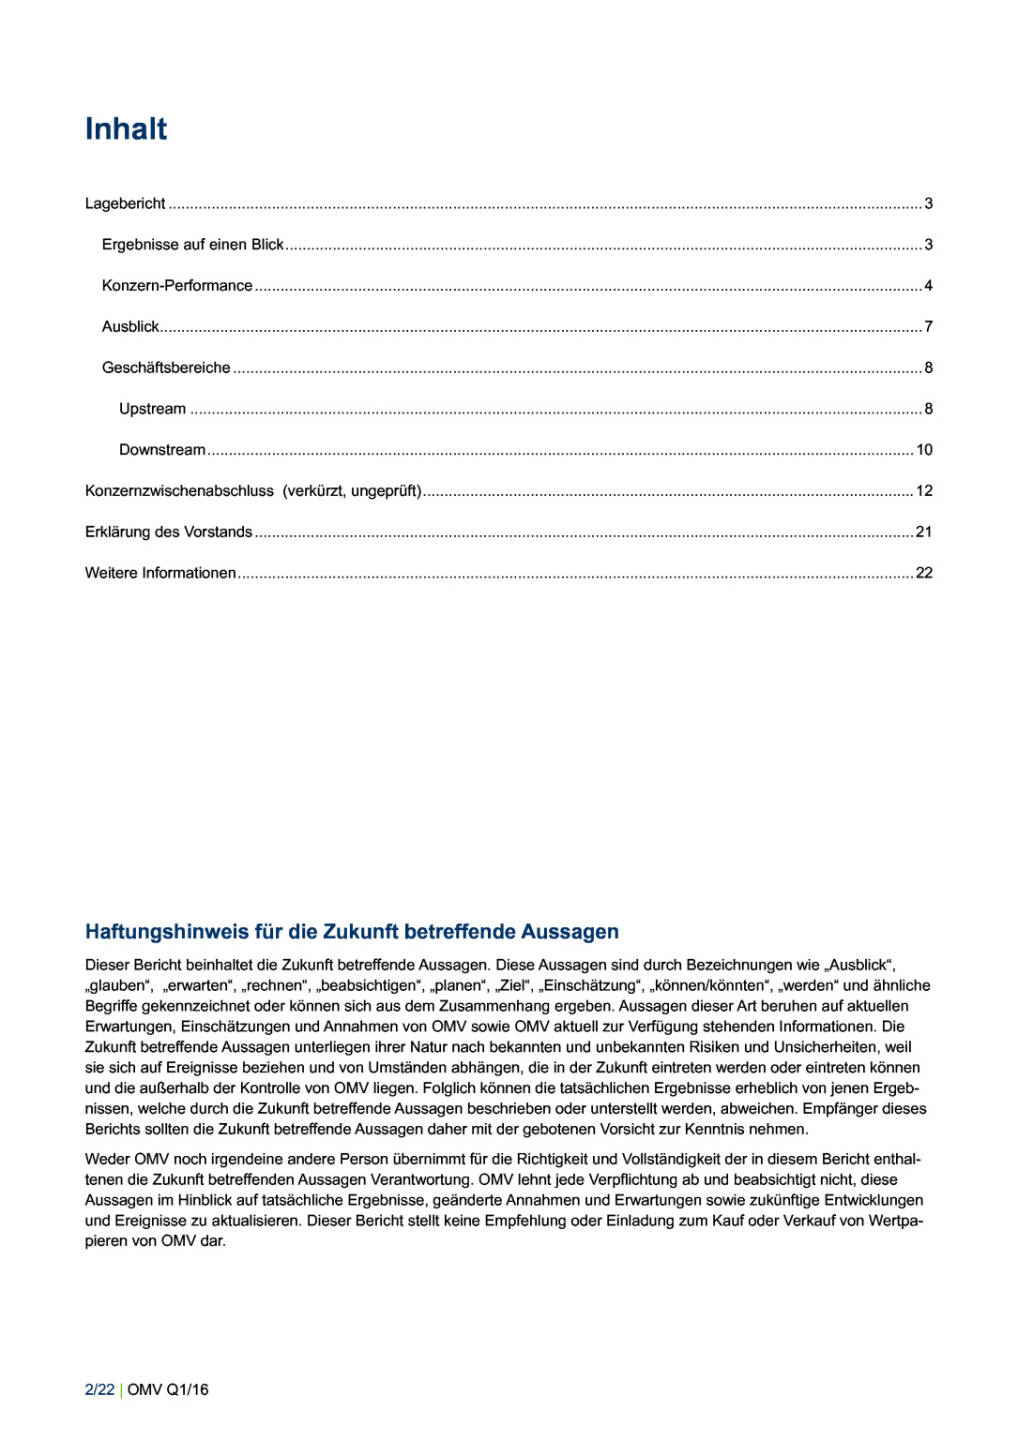 OMV Konzernbericht Jänner – März 2016, Seite 2/22, komplettes Dokument unter http://boerse-social.com/static/uploads/file_1031_omv_konzernbericht_janner_marz_2016.pdf